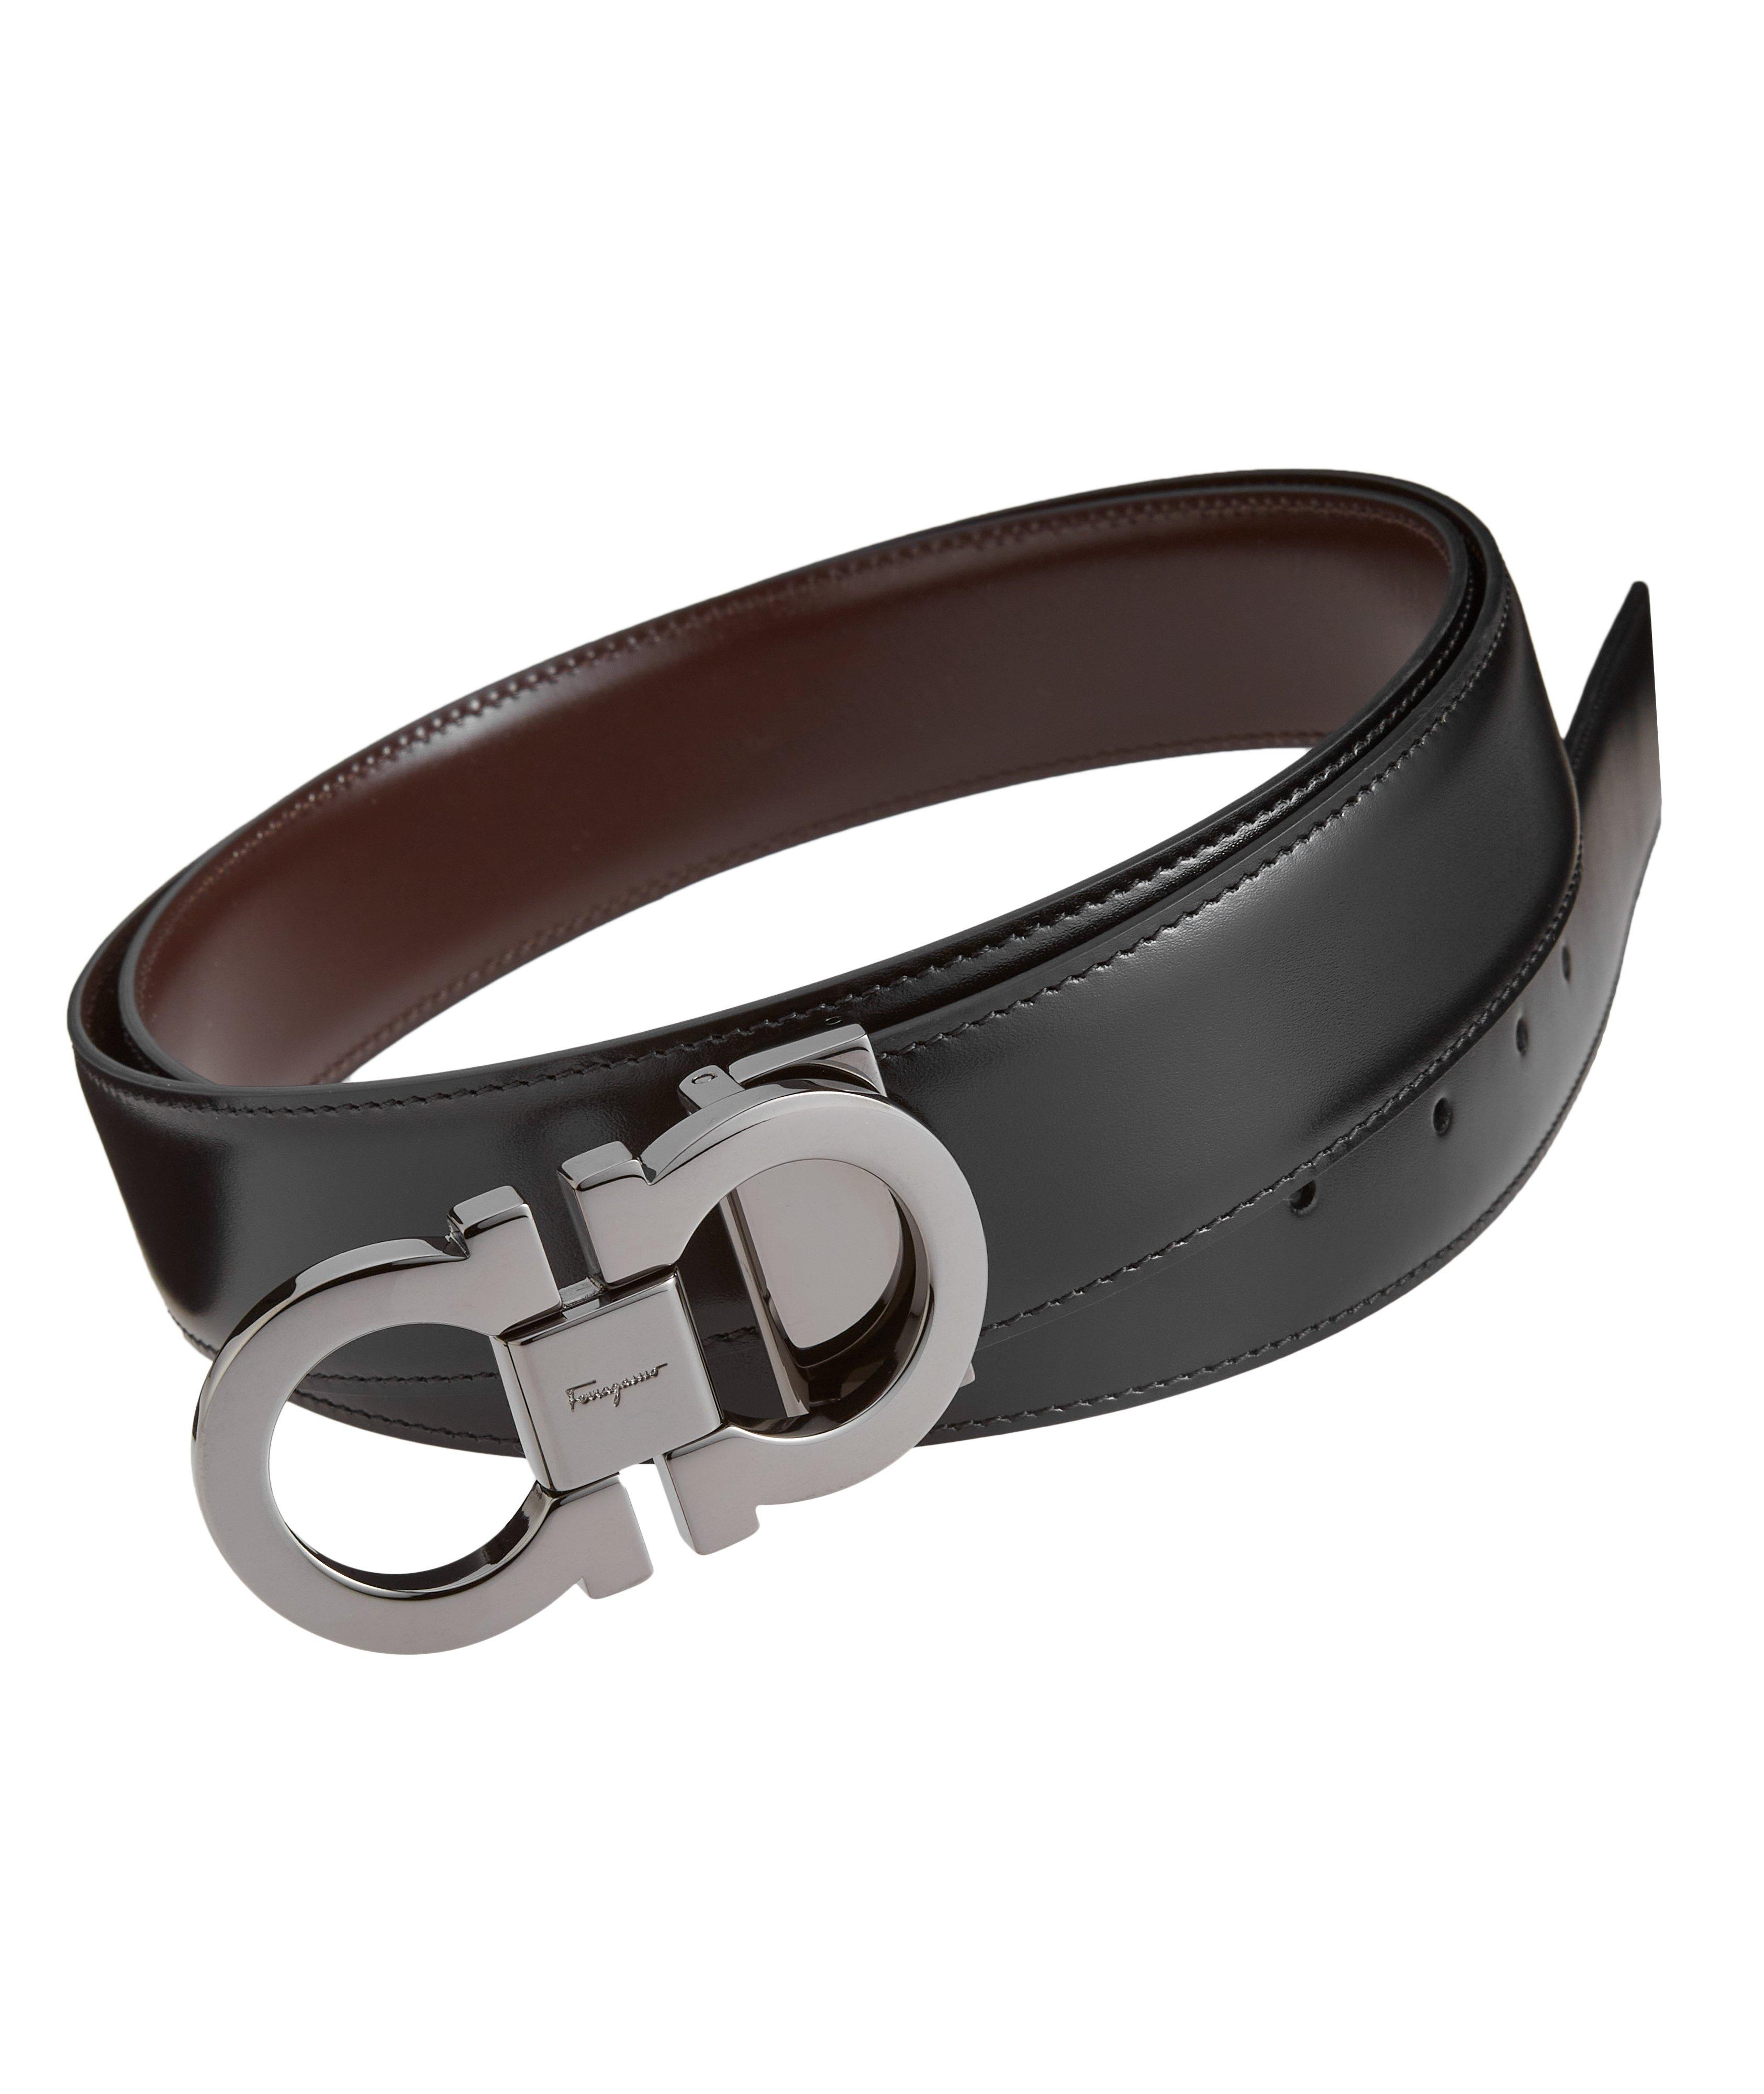 Reversible Double Gancini Leather Belt image 0